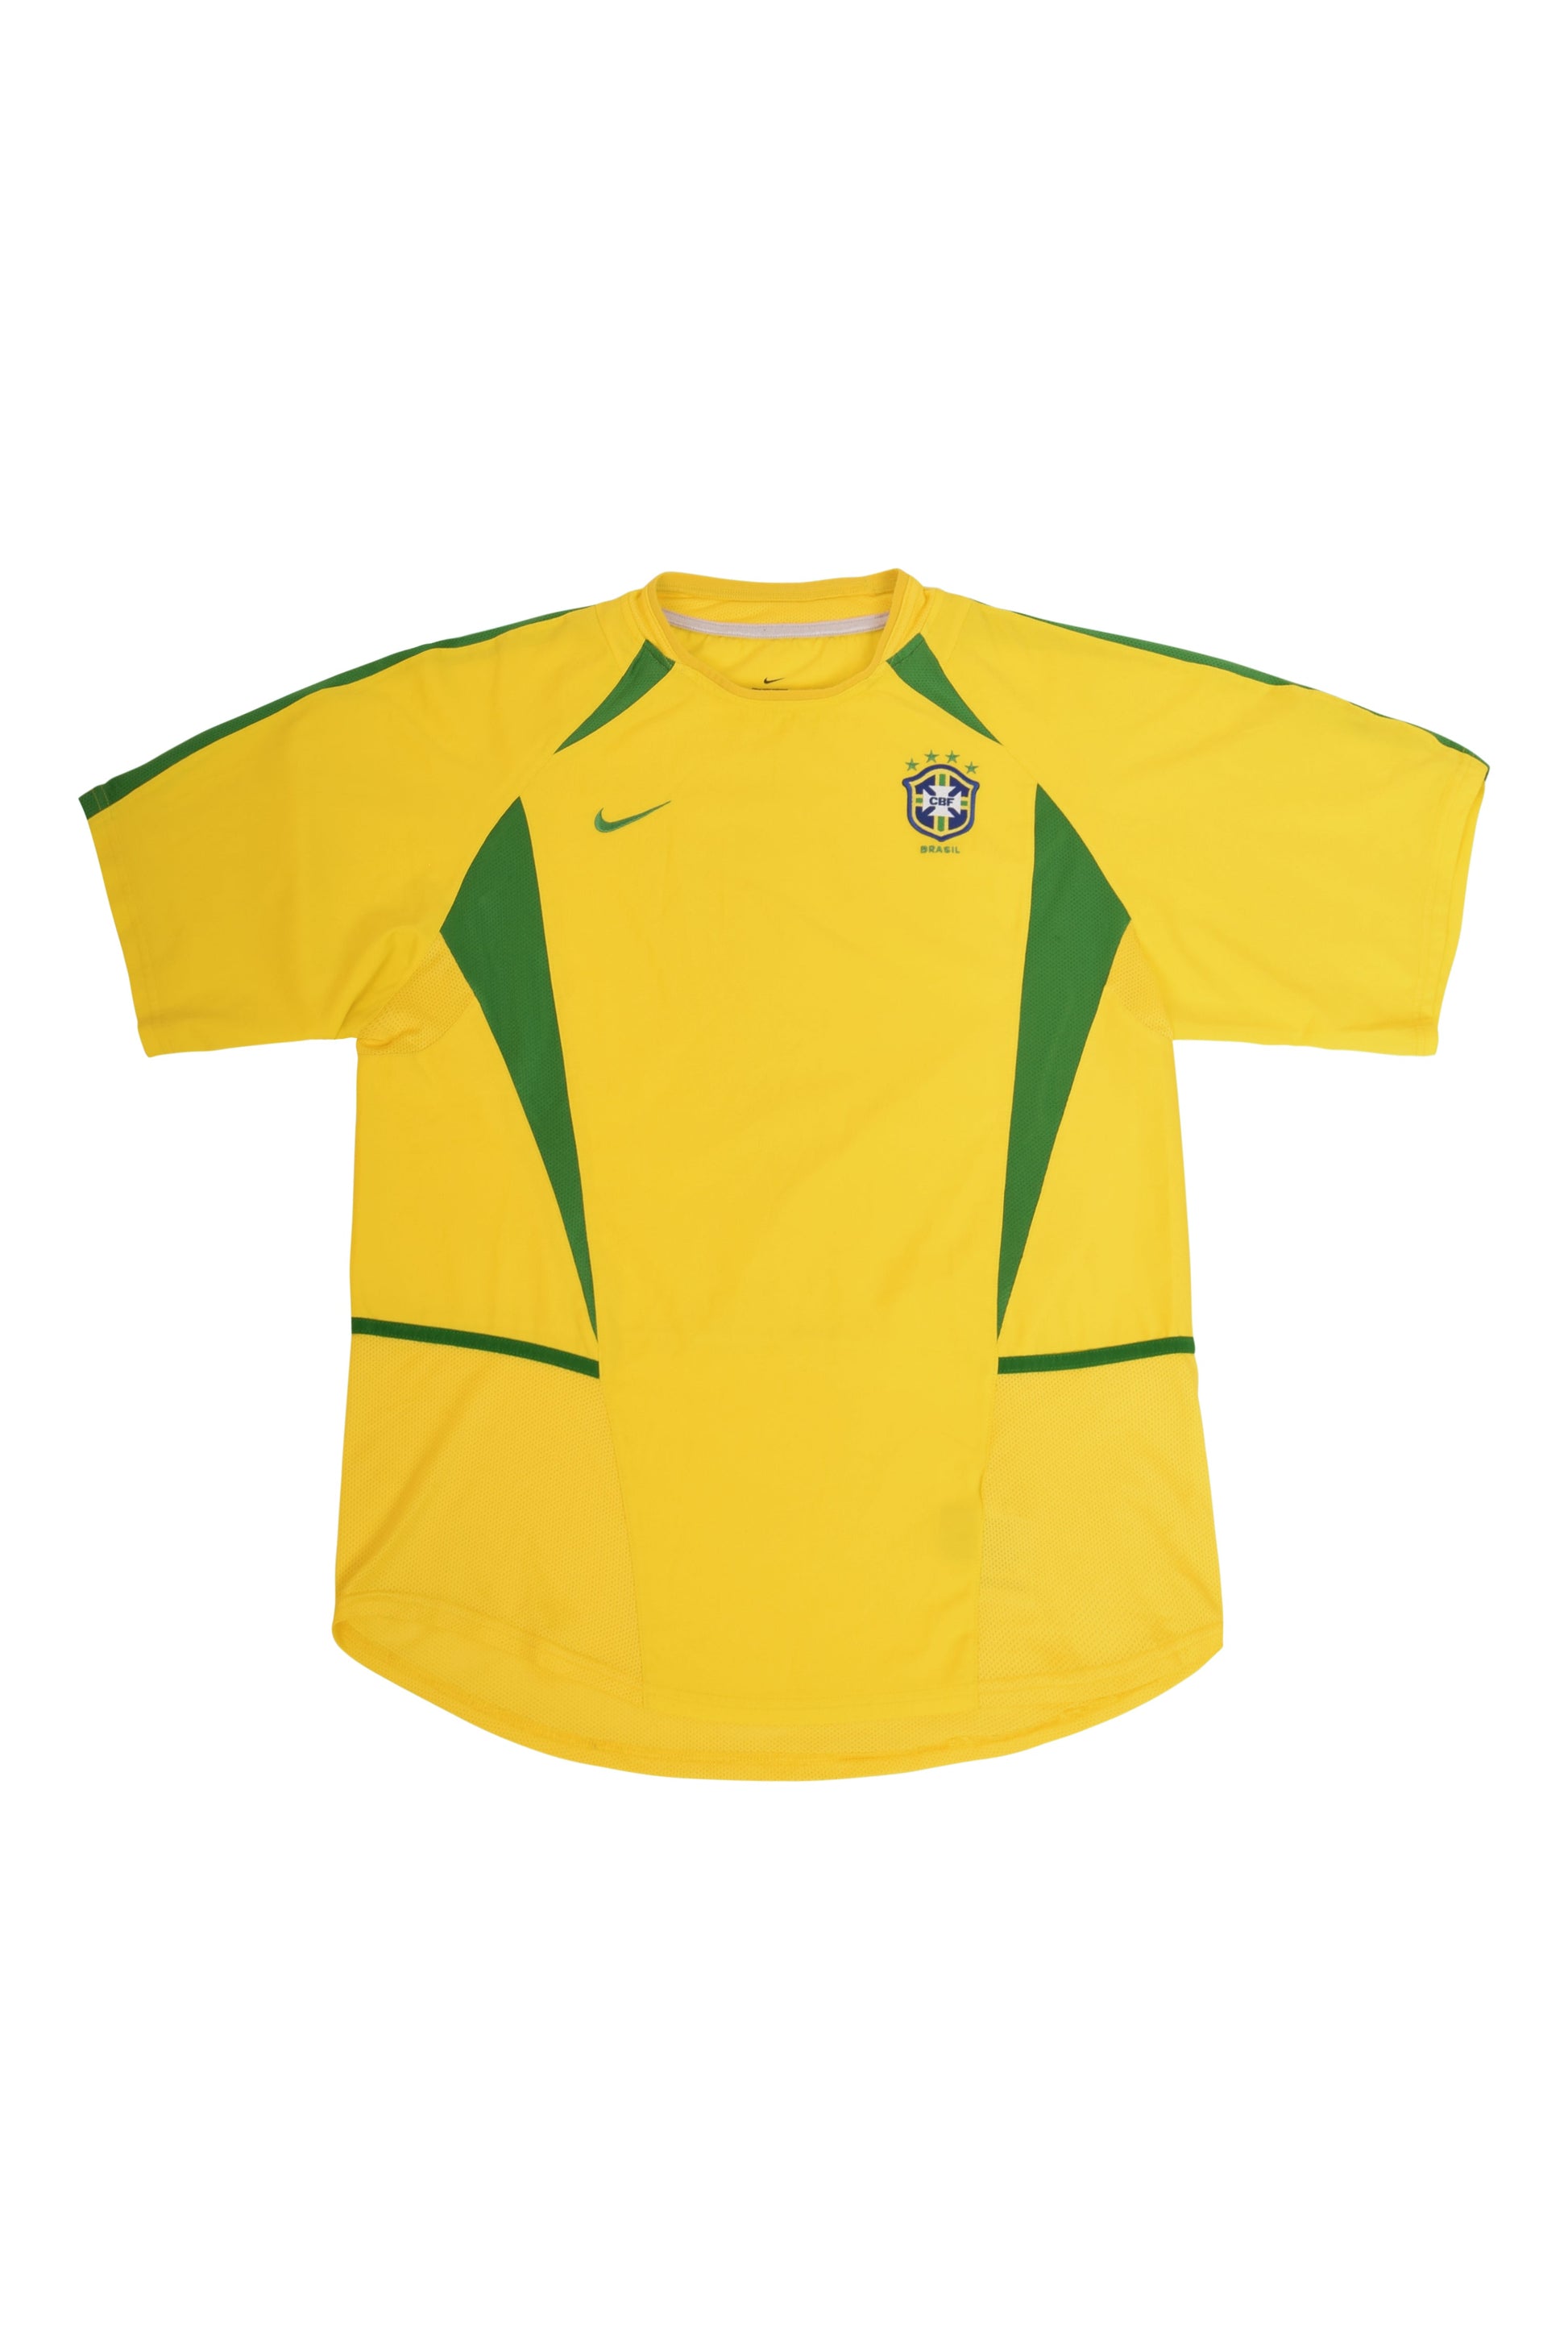 Brasil Brazil Nike Home Football Shirt 2002 - 2004 Yellow